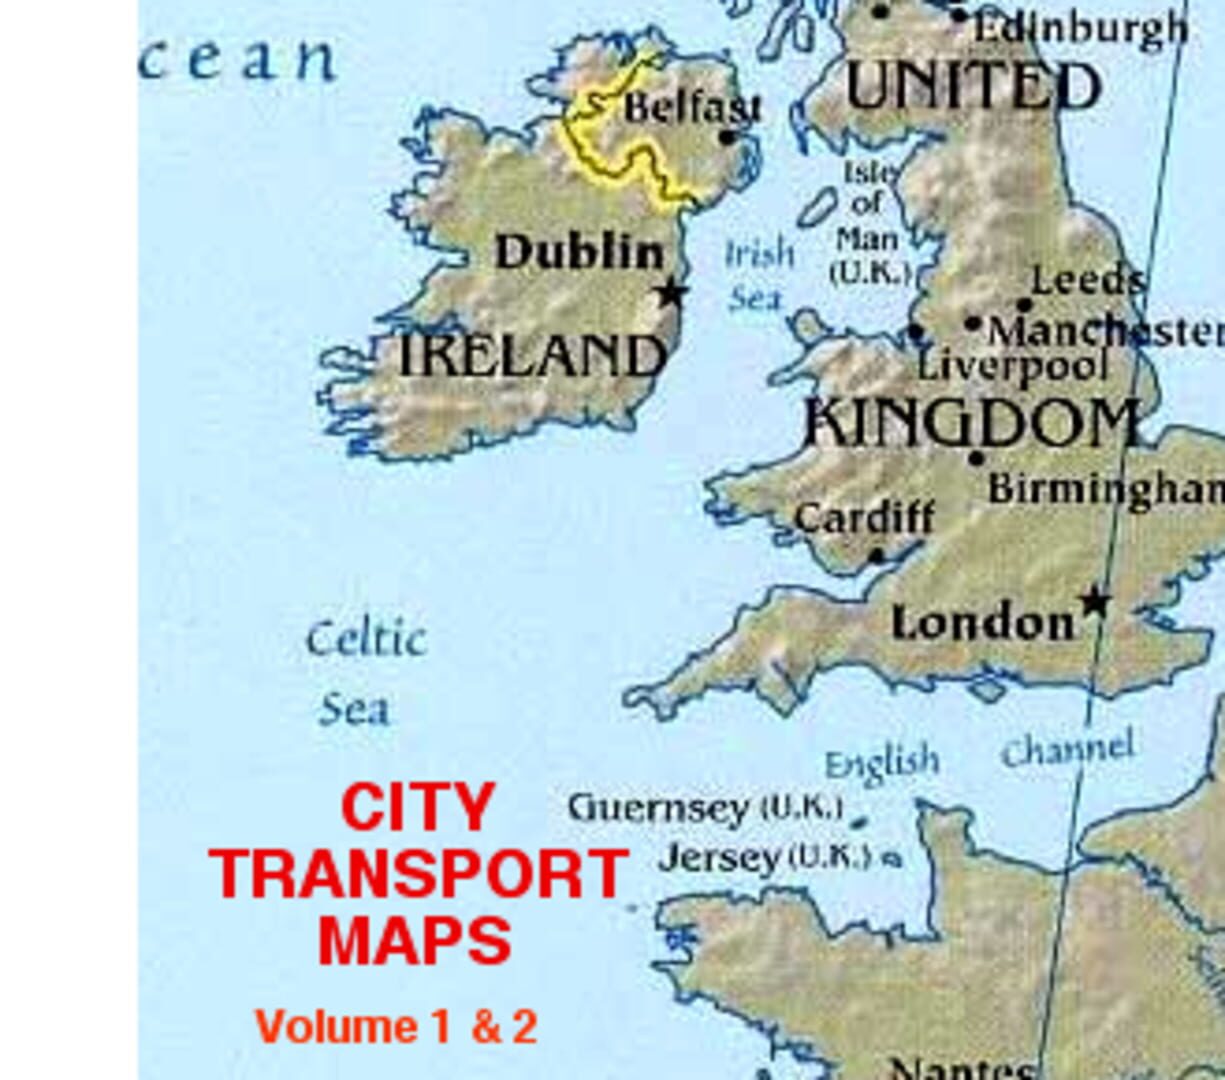 City Transport Map Volumes 1 & 2 - 2009